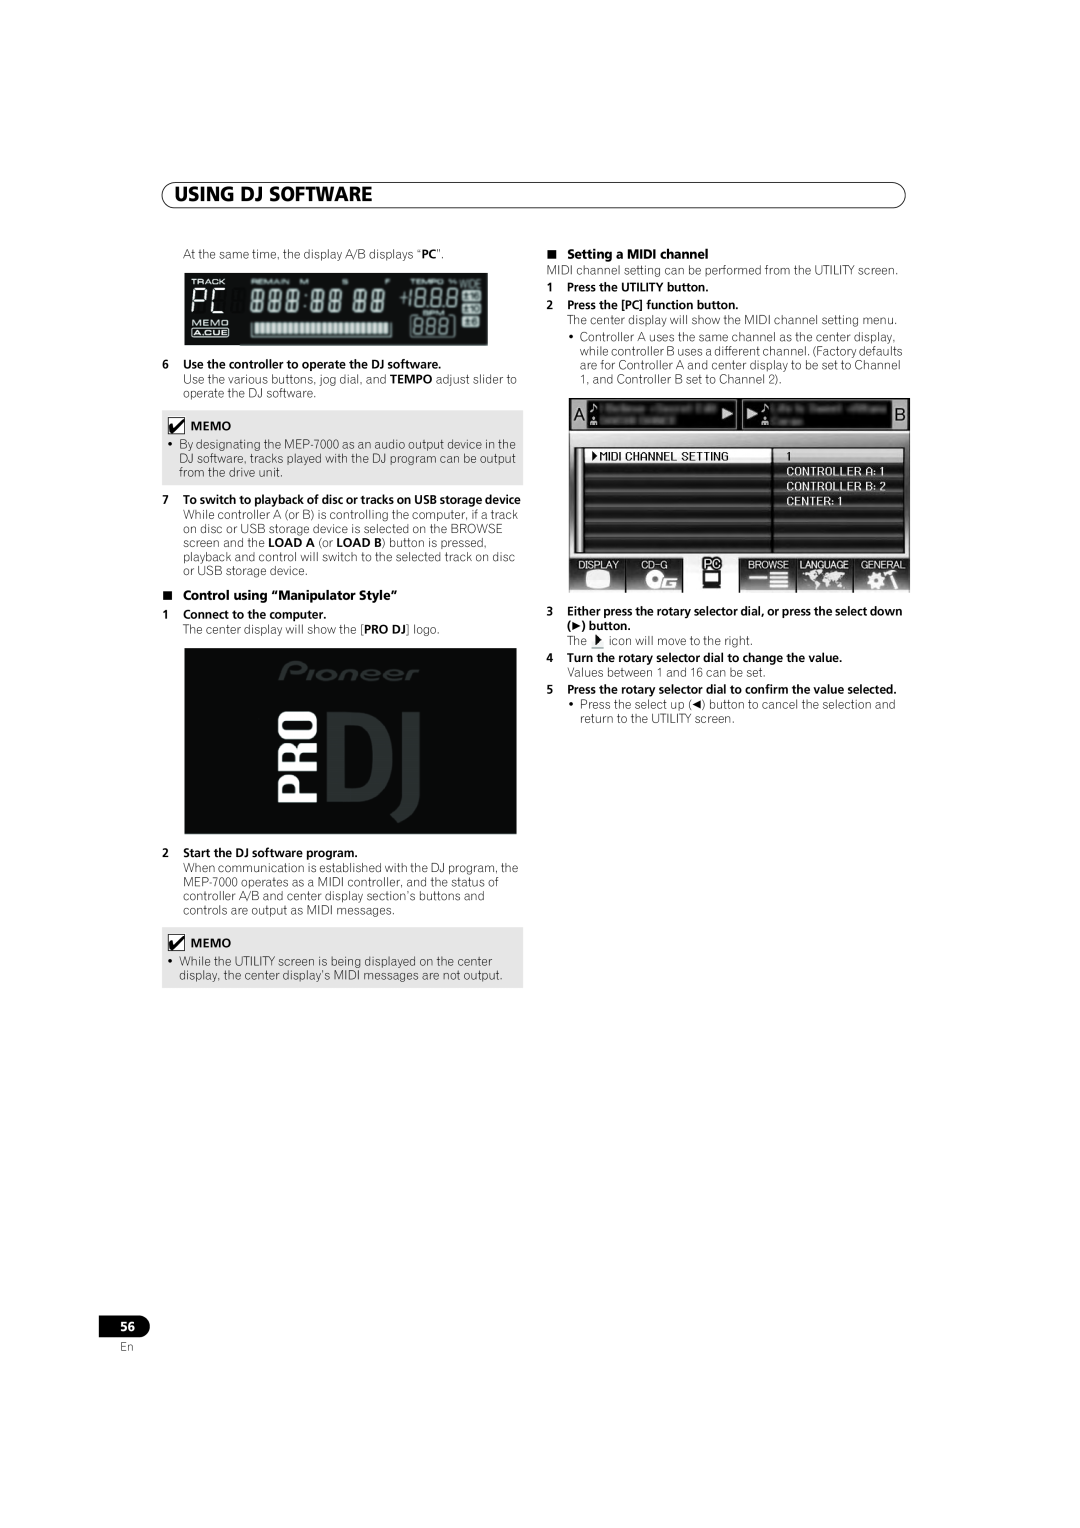 Pioneer MEP-7000 operating instructions Using Dj Software, Control using “Manipulator Style”, Setting a MIDI channel 